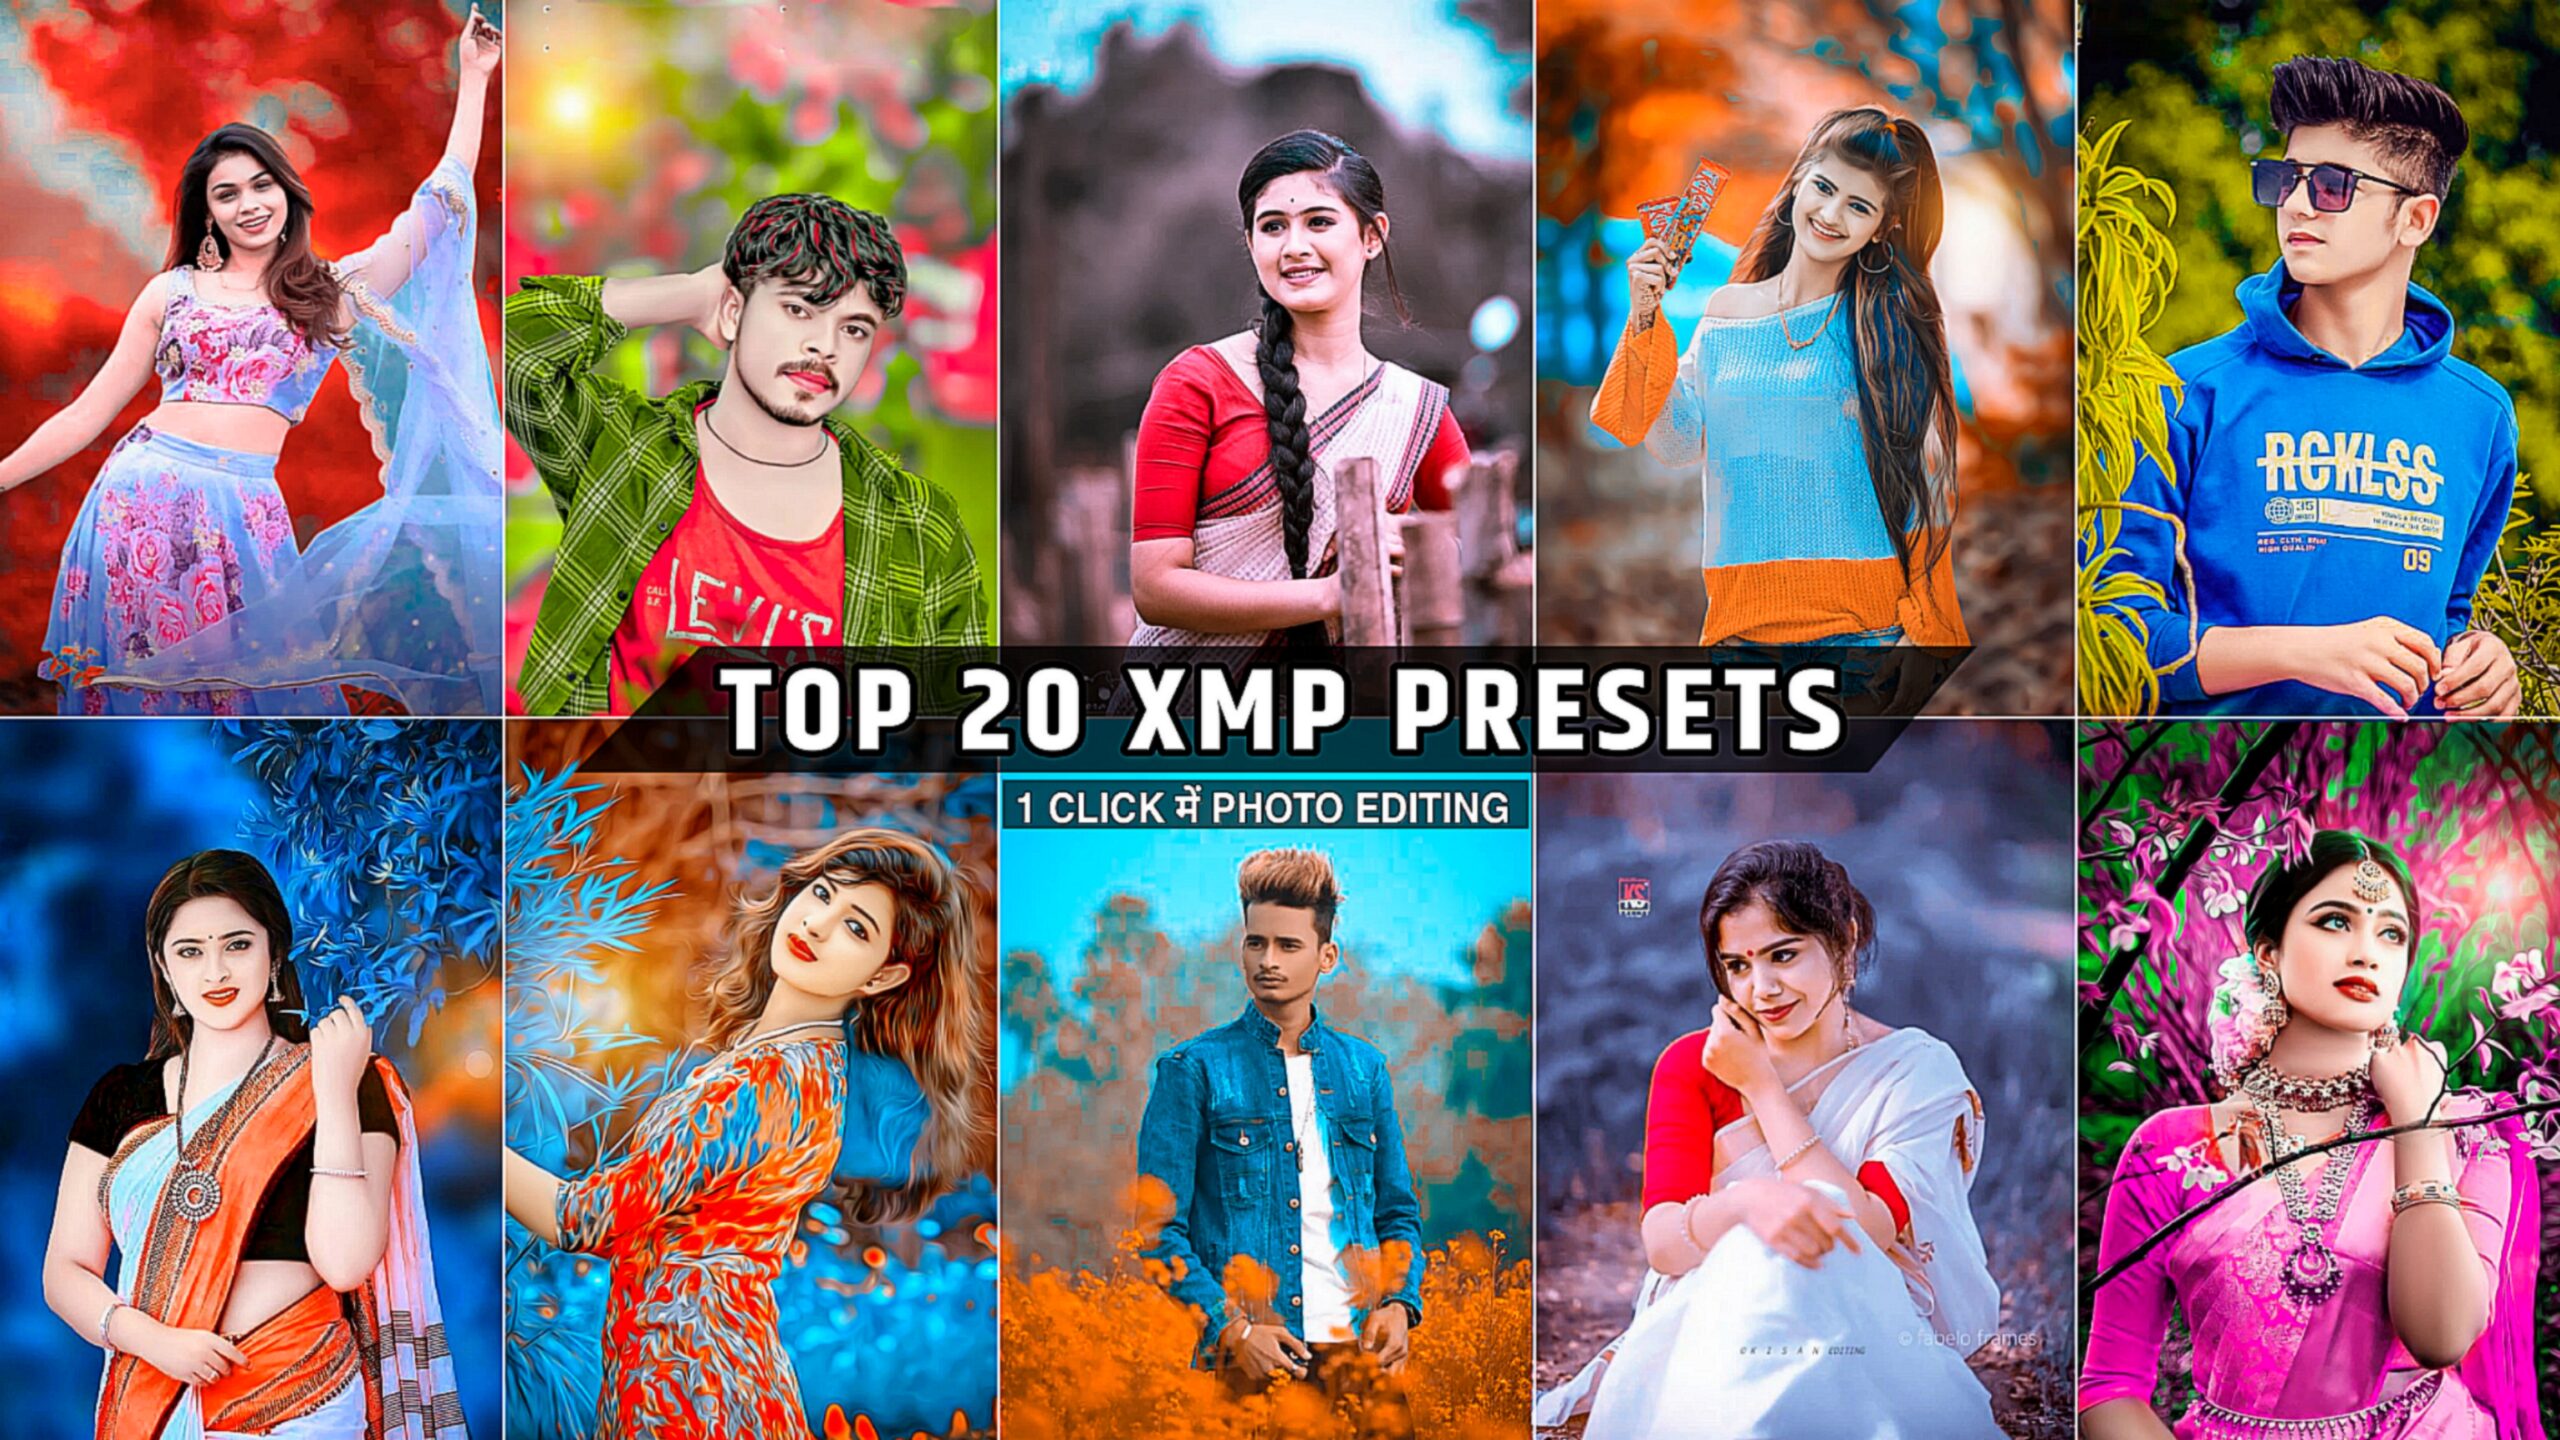 Top 20 Lightroom xmp presets download